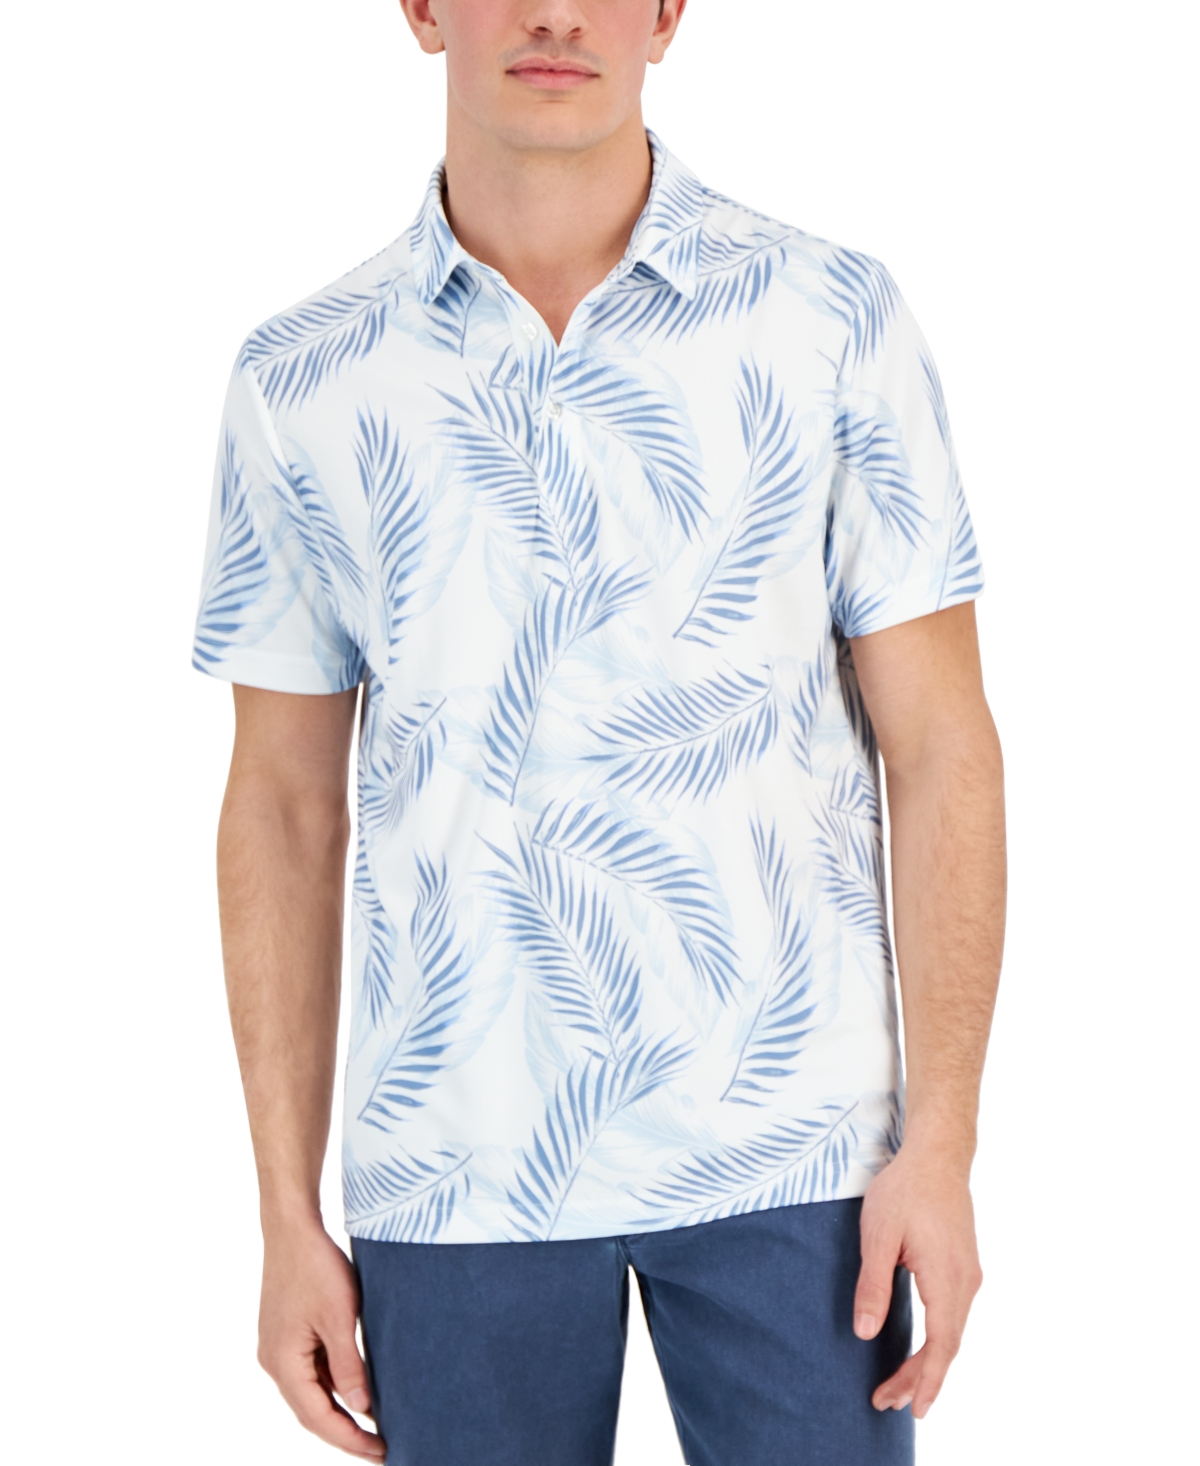 Men's Leaf Print Short Sleeve Tech Polo Shirt, Created for Macy's - Bright White